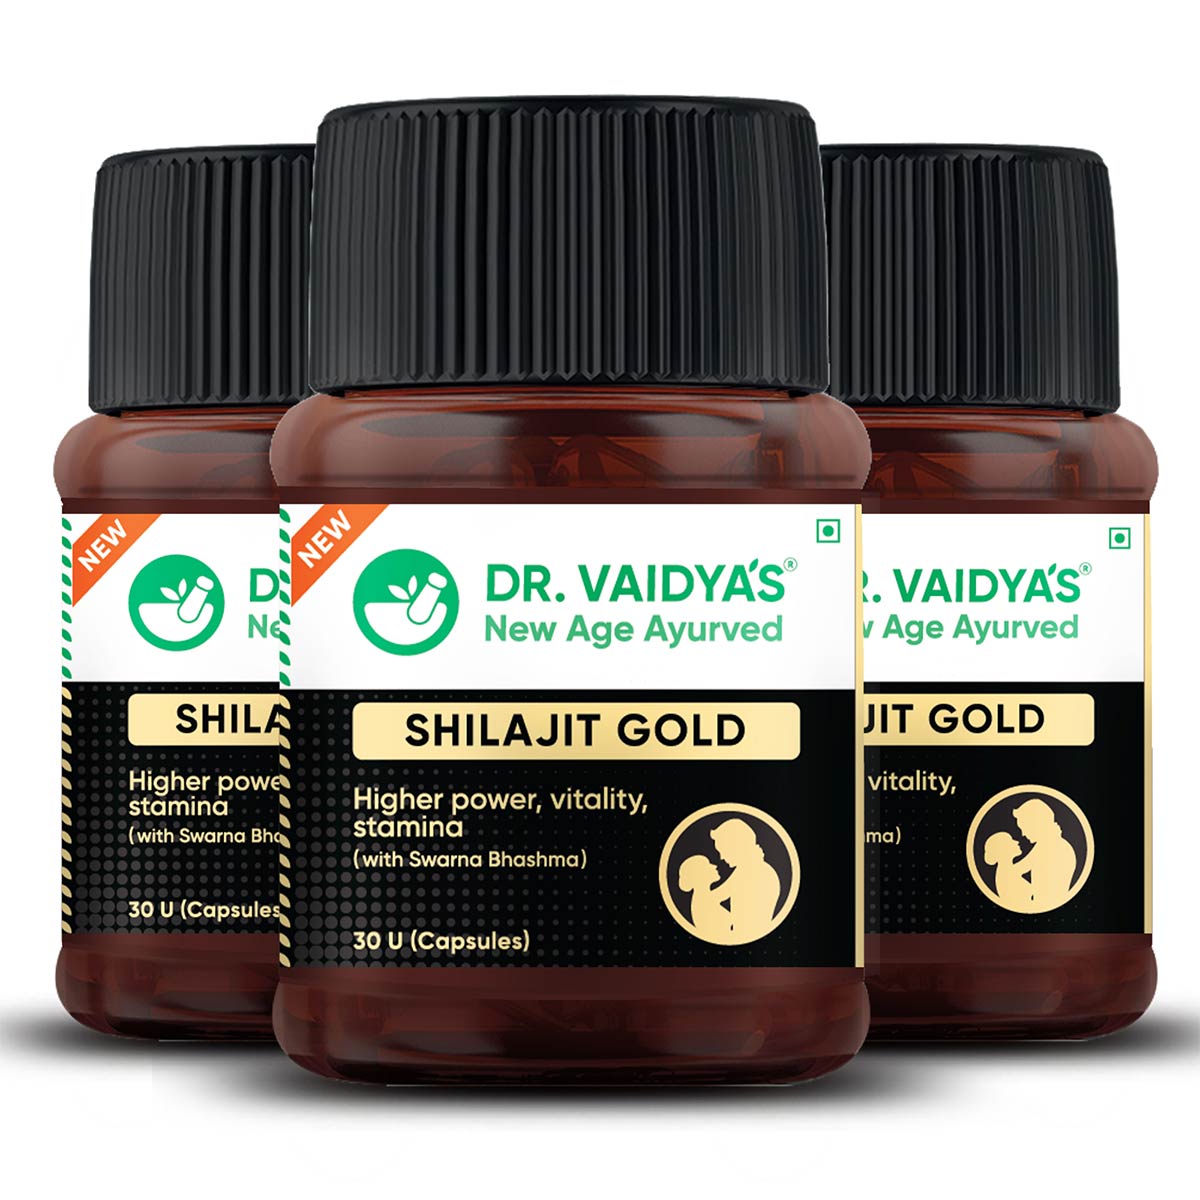 Shilajit Gold Capsules: Premium Shilajit In Its Purest Form For More Power